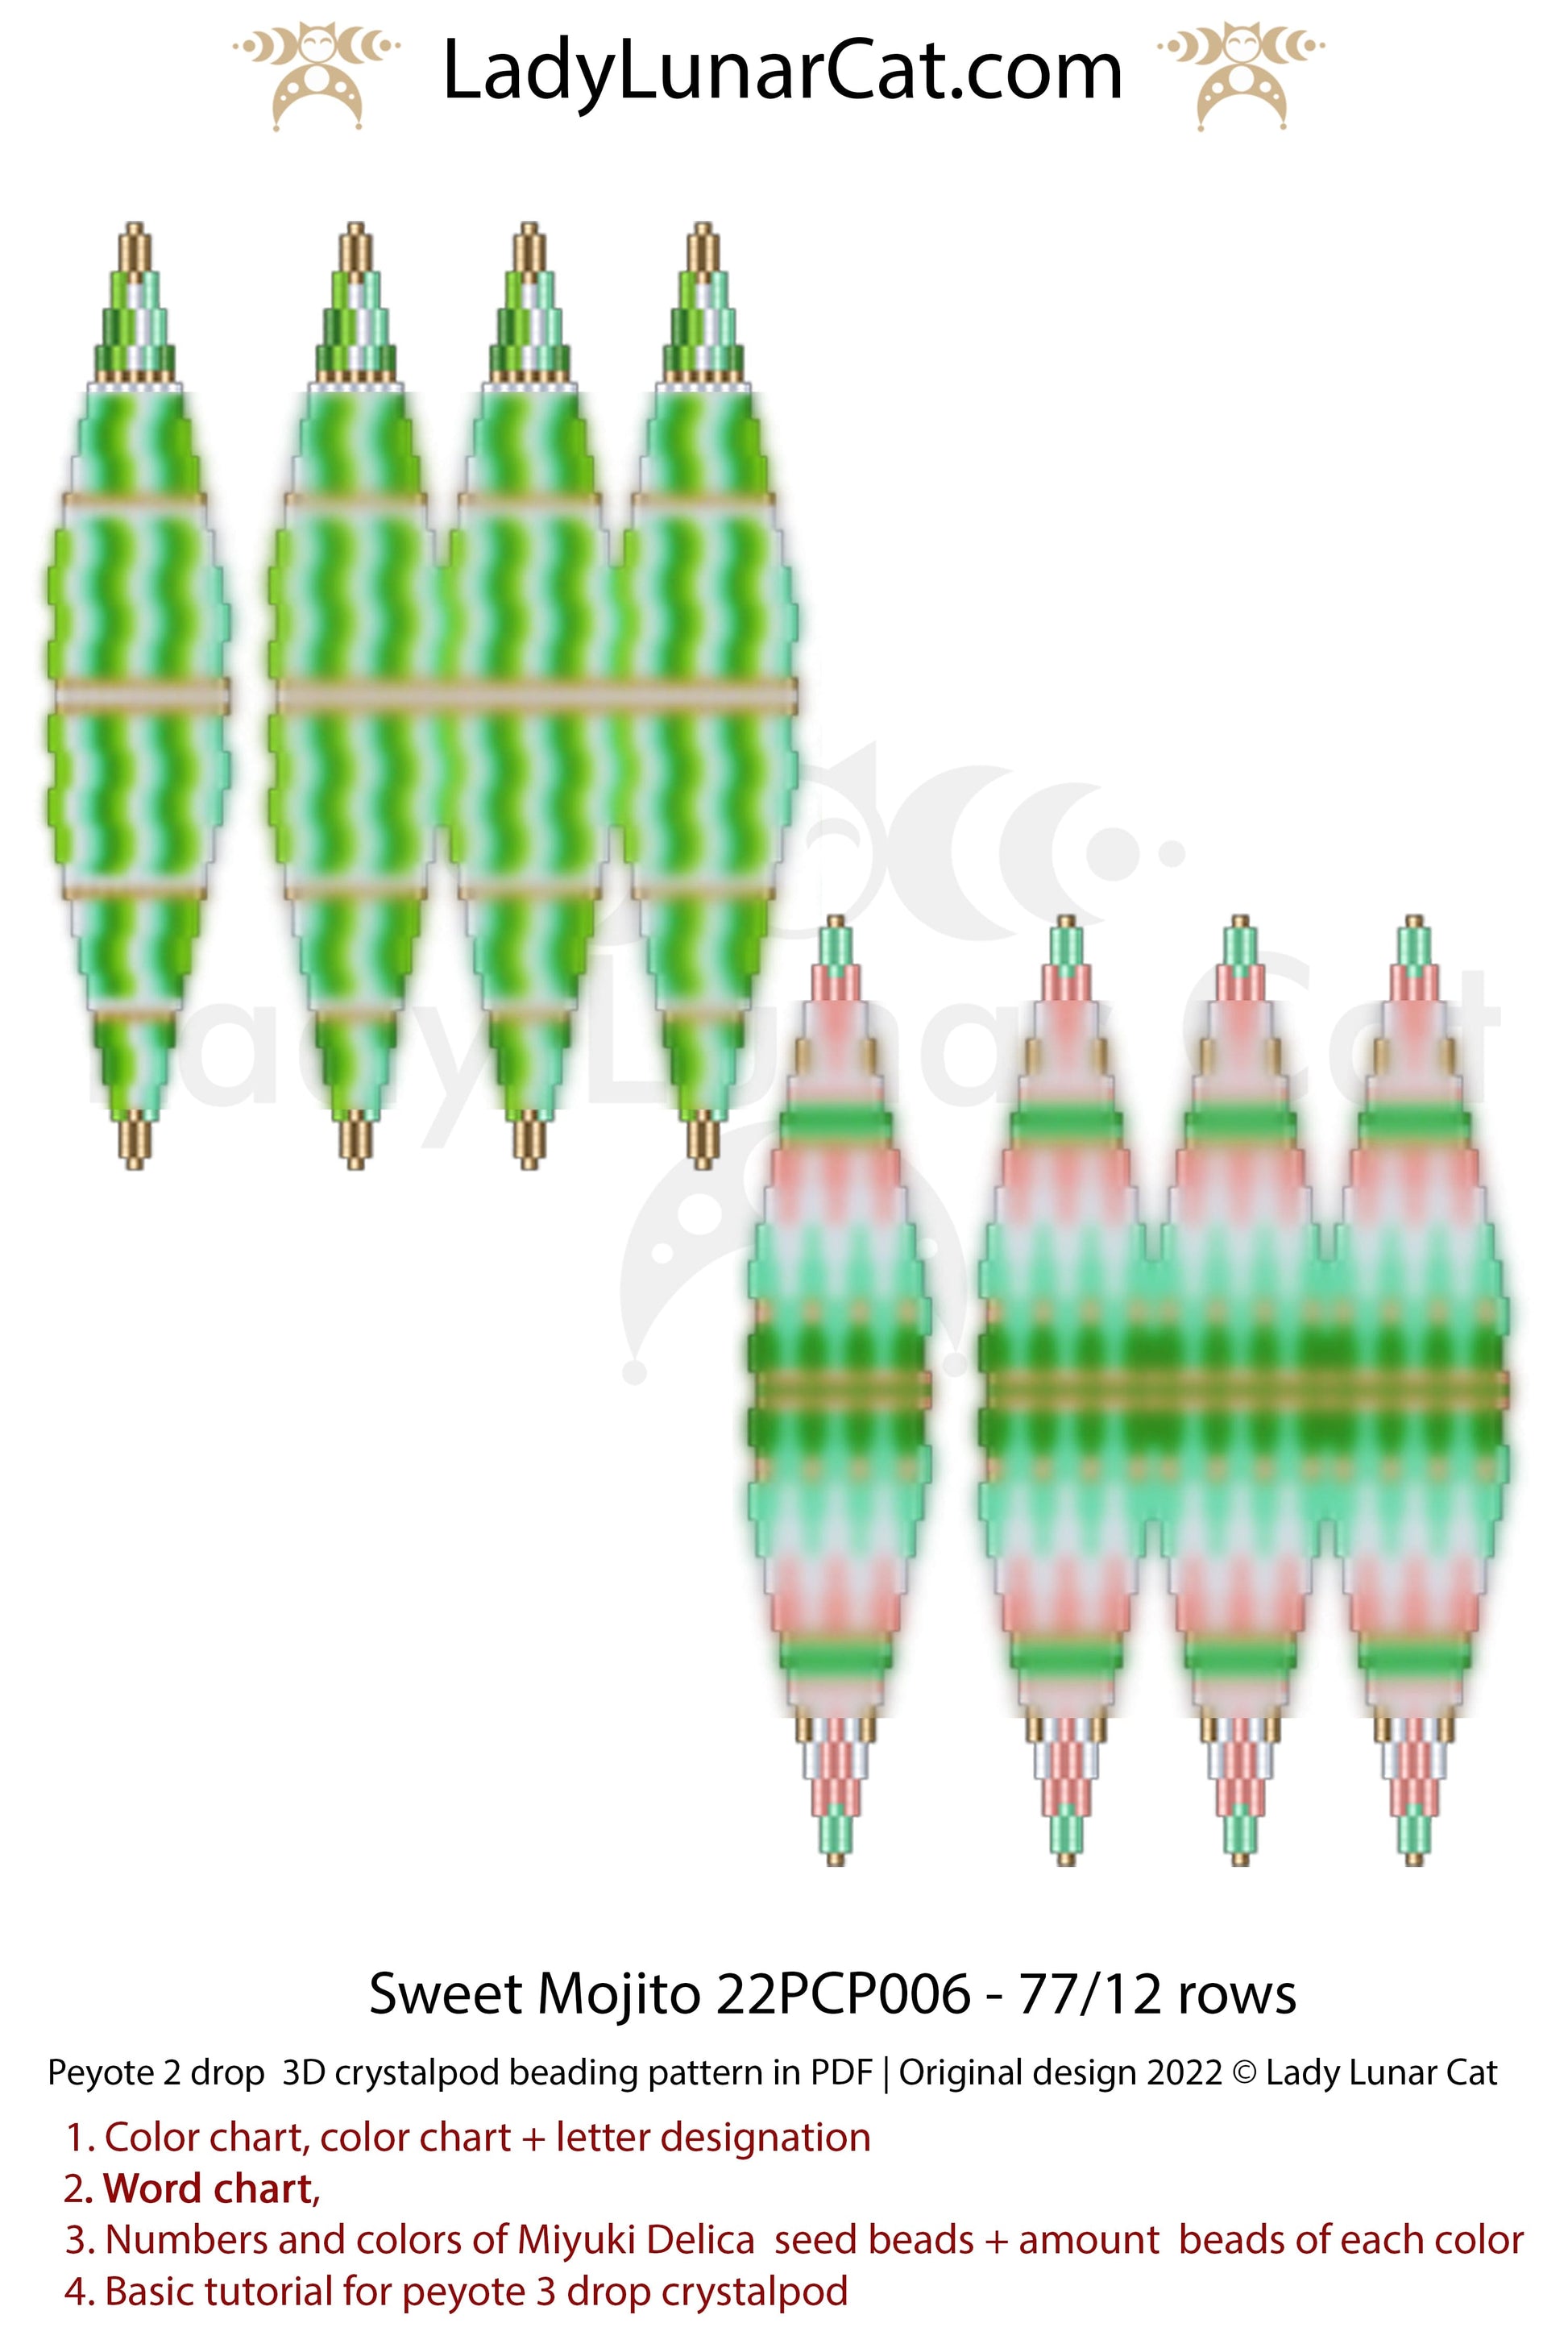 Peyote 3drop pod pattern or crystalpod pattern for beading  Sweet Mojito 22PCP006 - 77/12 rows LadyLunarCat